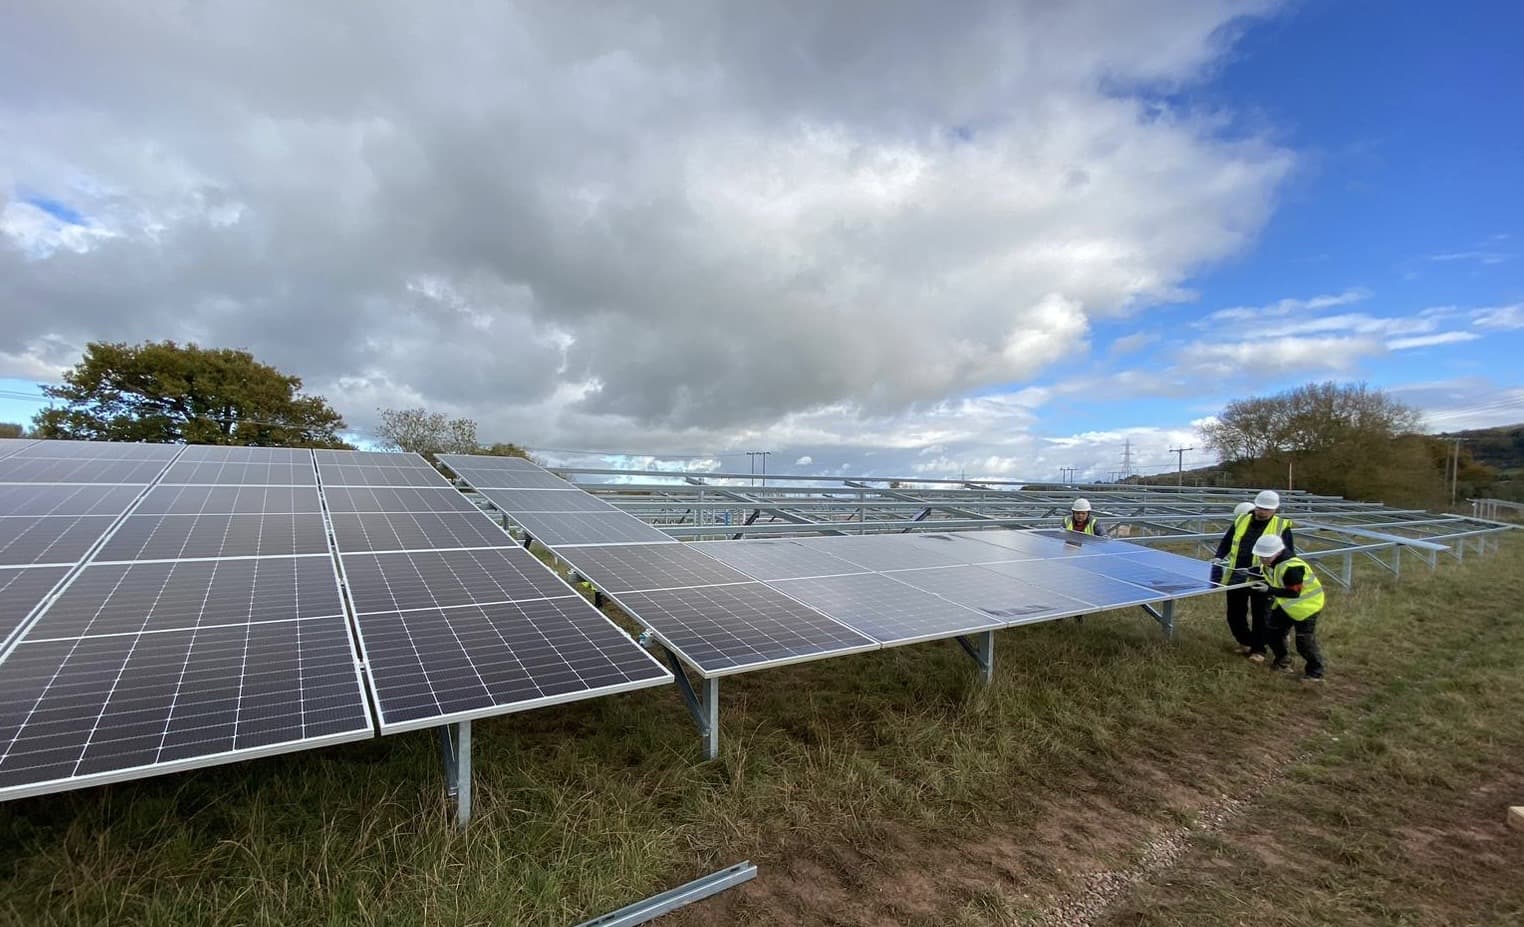 Larport Solar Farm: A Key Driver for BNP Paribas’ Net-Zero Strategy